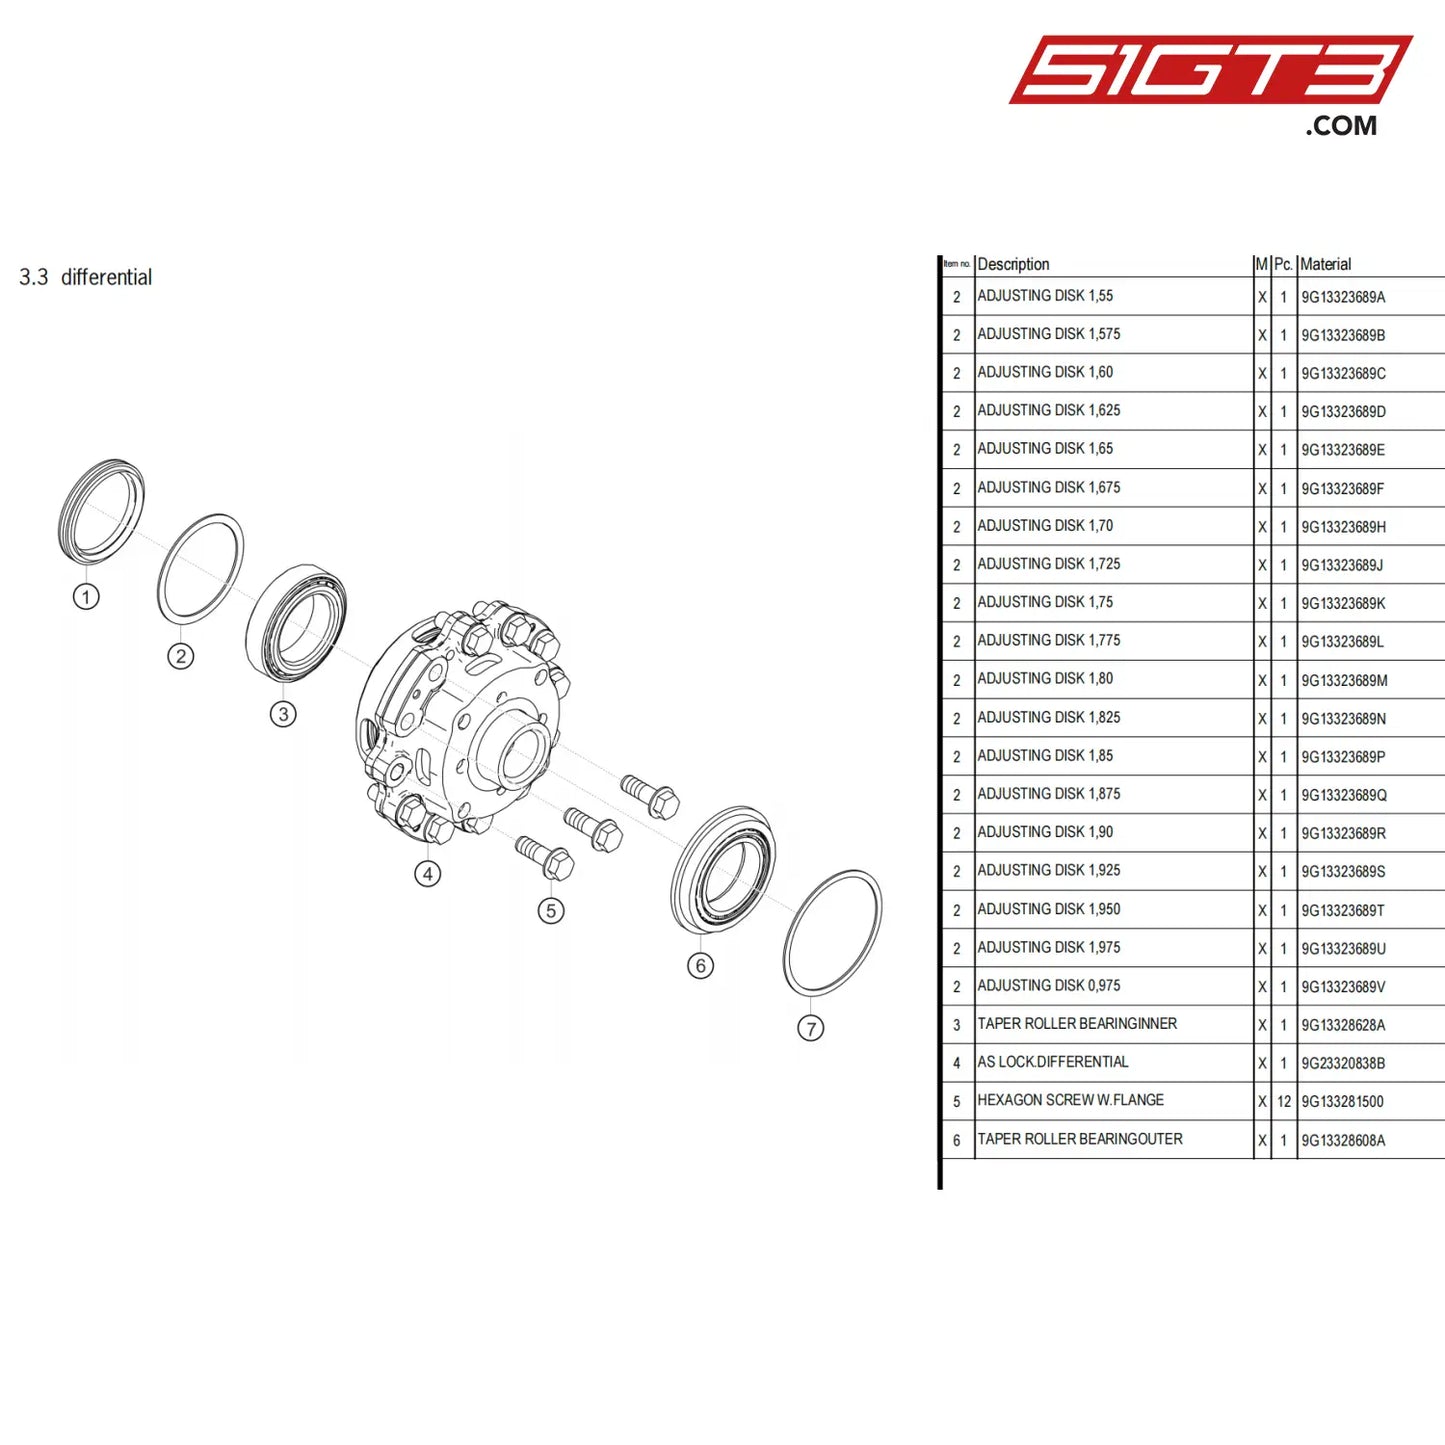 Adjusting Disk 1 475 - 9G13323668P [Porsche 718 Cayman Gt4 Clubsport] Differential